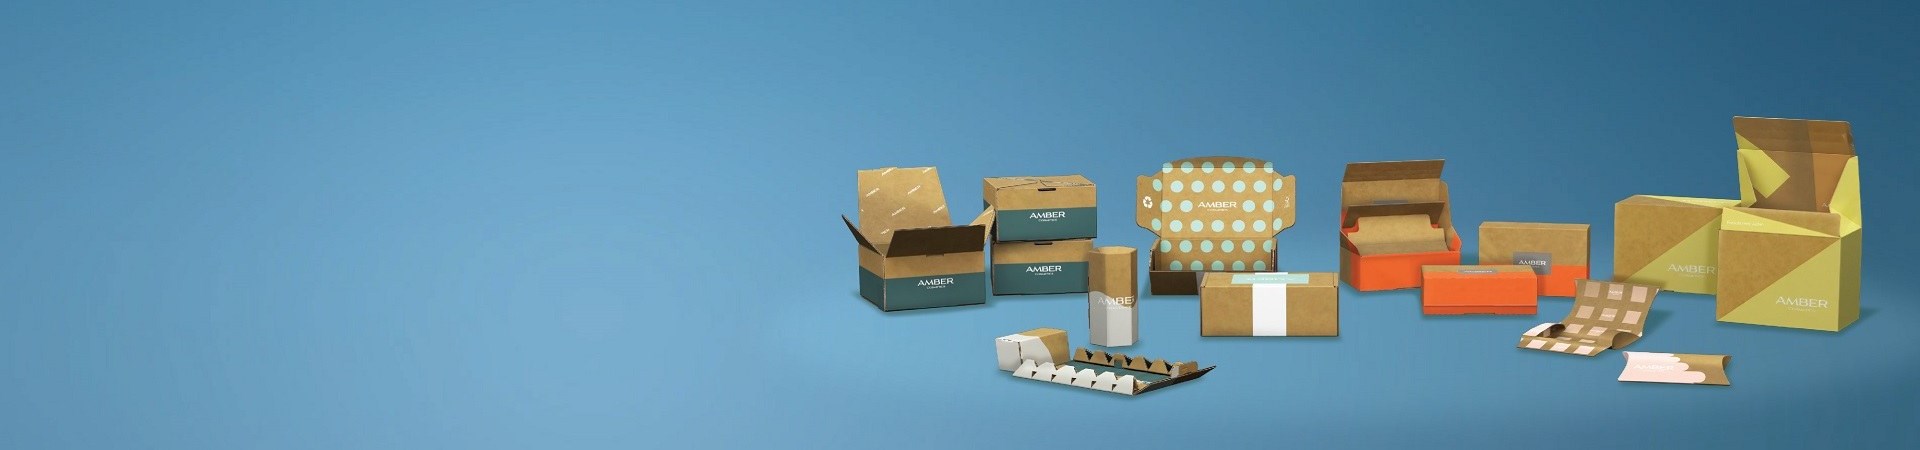 Packaging para eCommerce, embalagem eCommerce, Embalagem para produtos de saúde e beleza